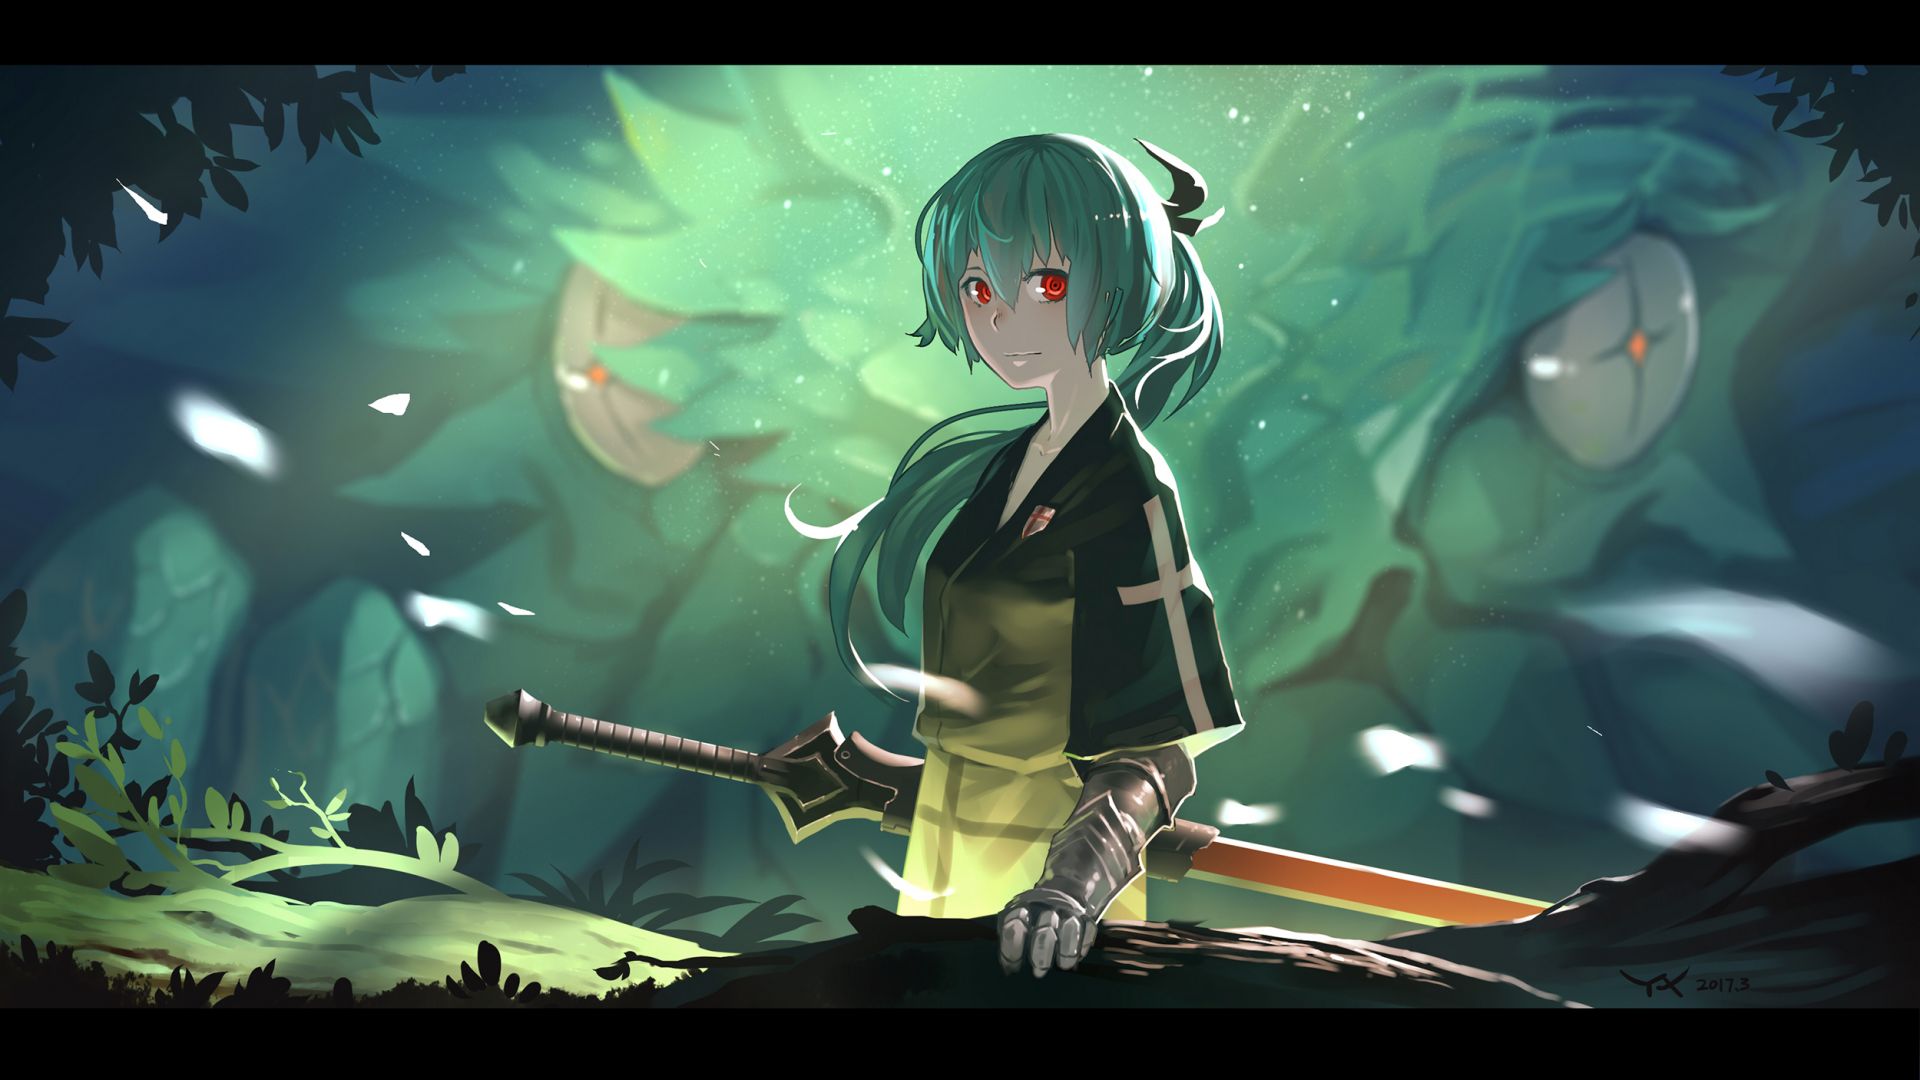 Desktop wallpaper warrior in forest original anime girl hd image picture background d